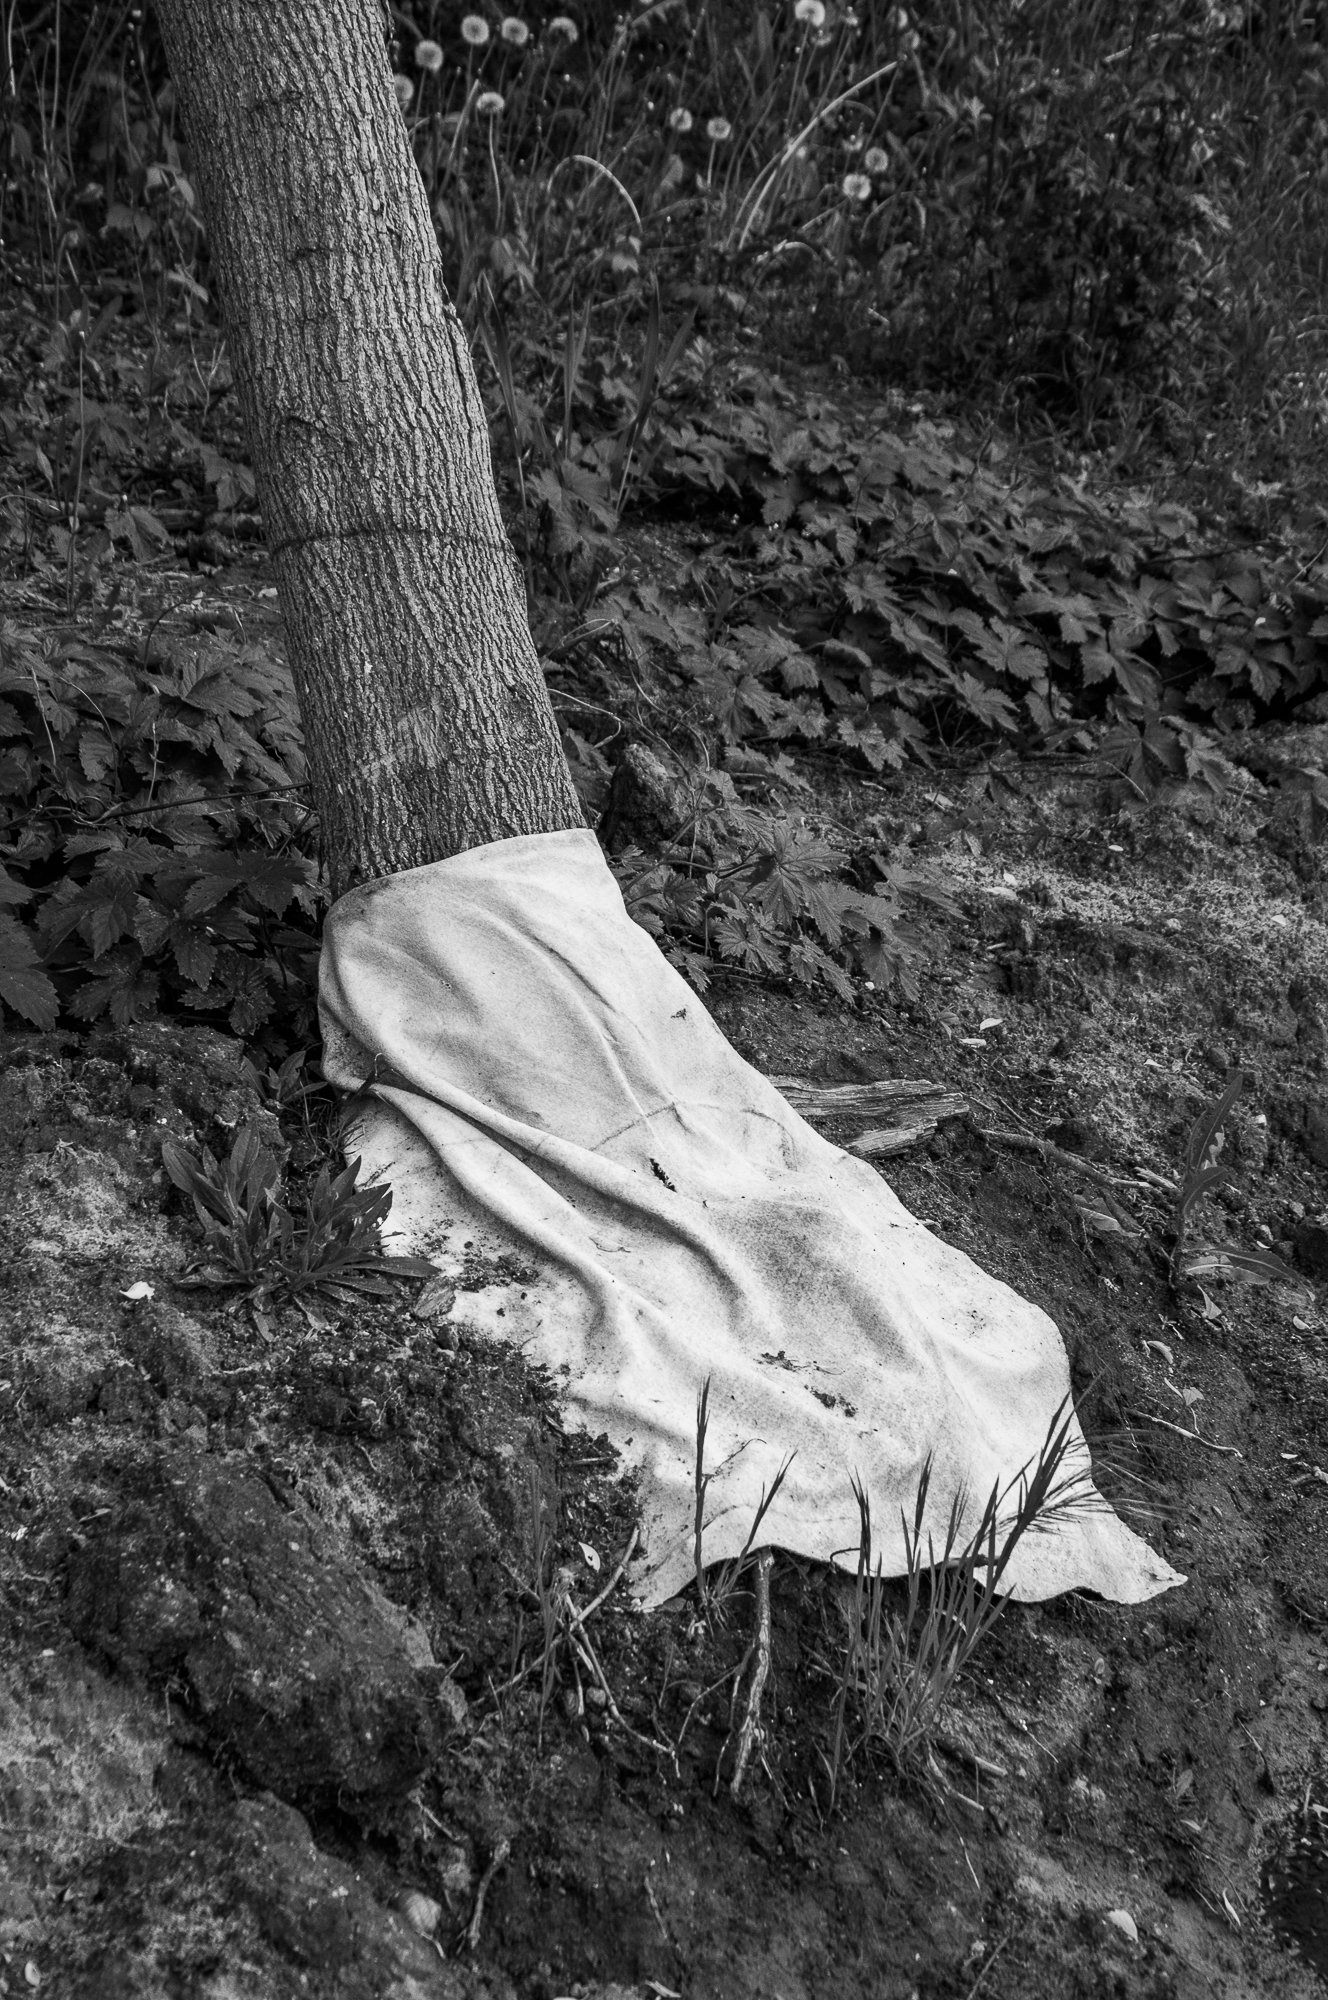 Adam Mazek Photography Warsaw (Warszawa) 2019. Post: "Uniqueness is common." Tree. Minimalism.